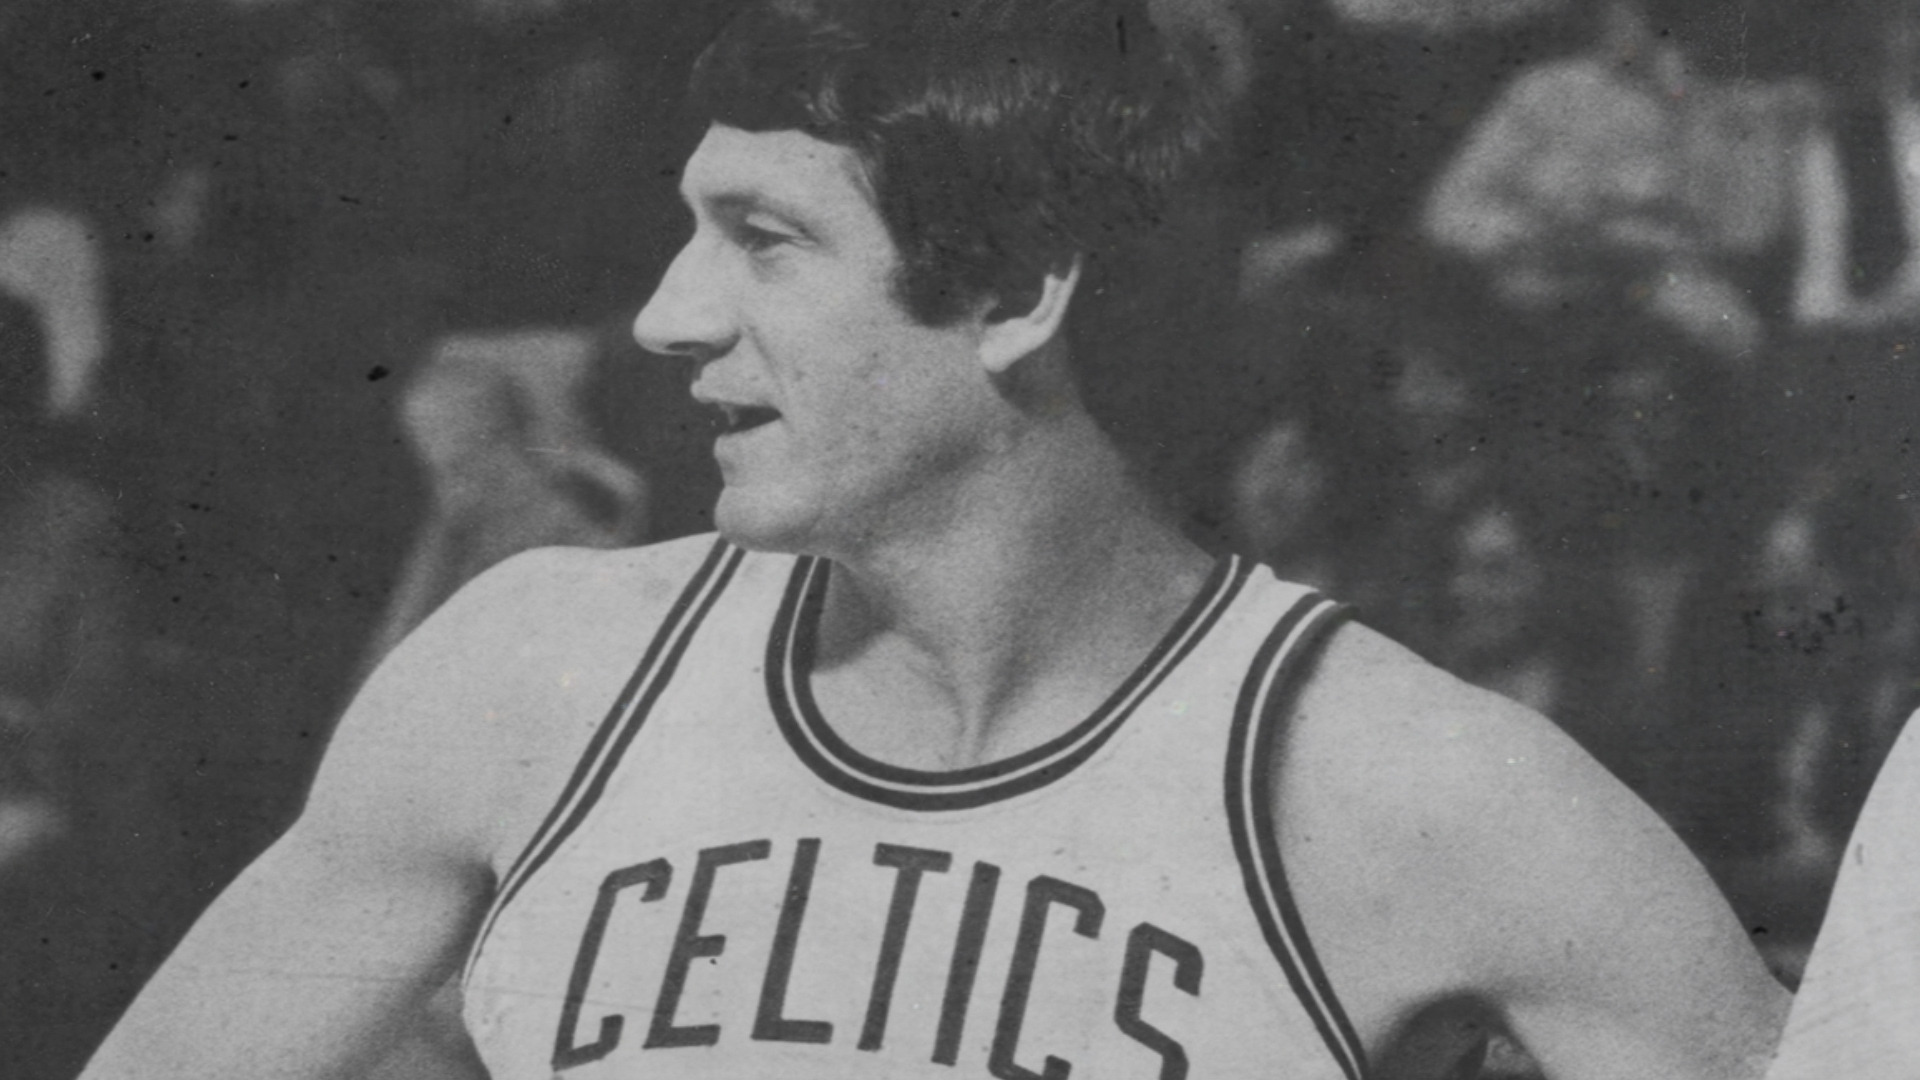 Remembering the underappreciated Celtic great John Havlicek - CelticsBlog